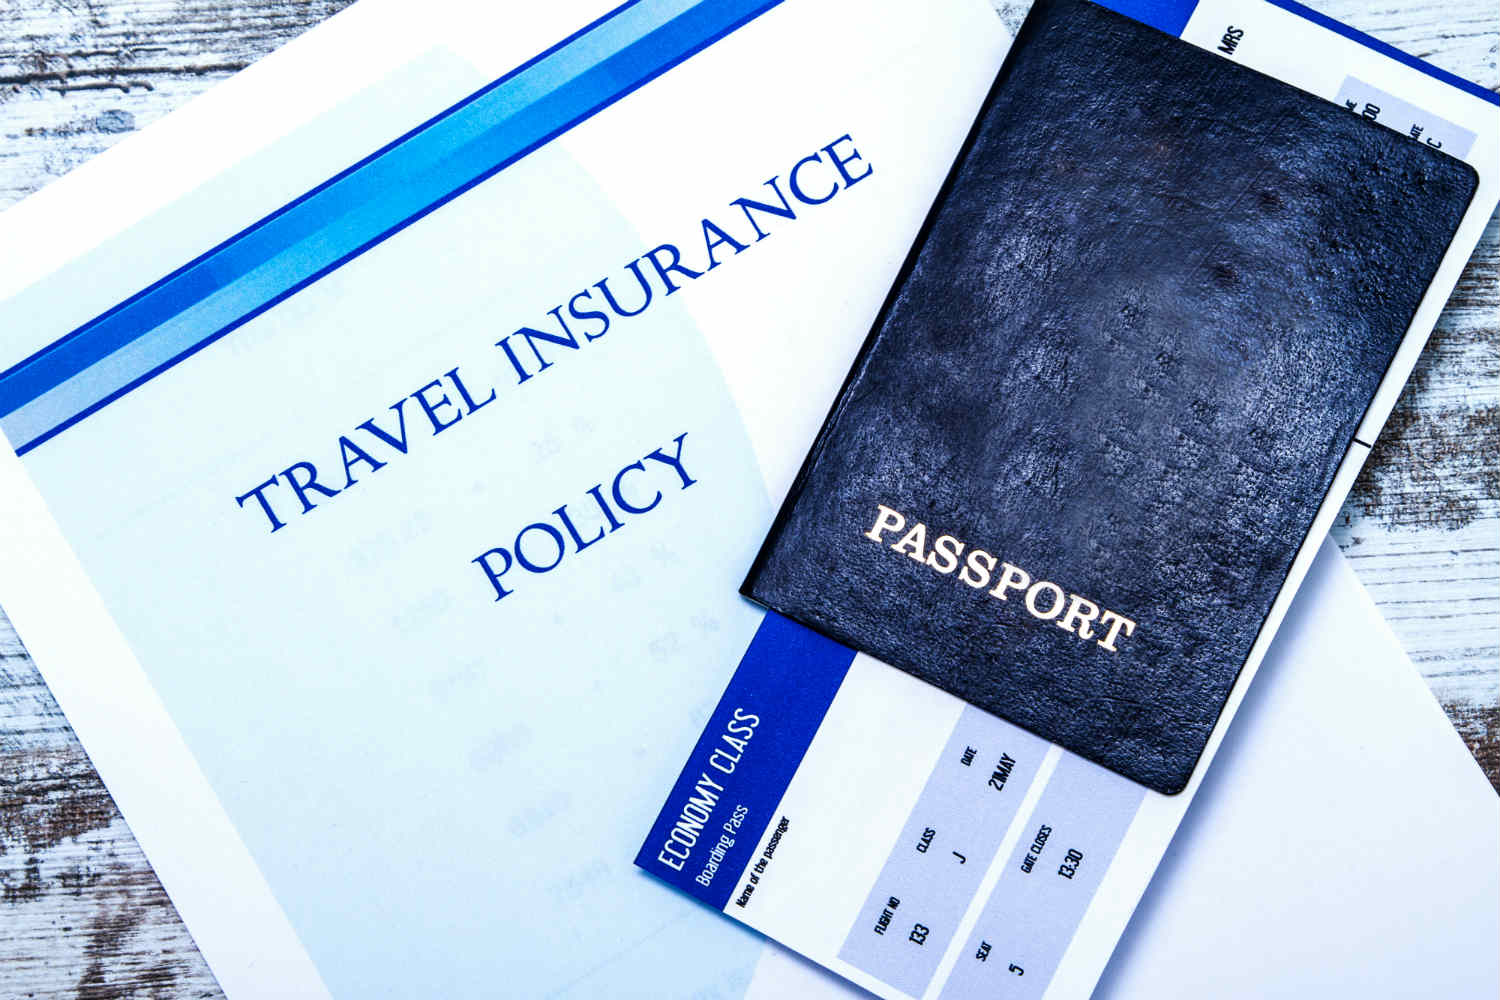 Soaring overseas medical costs prompt Abta travel insurance warning